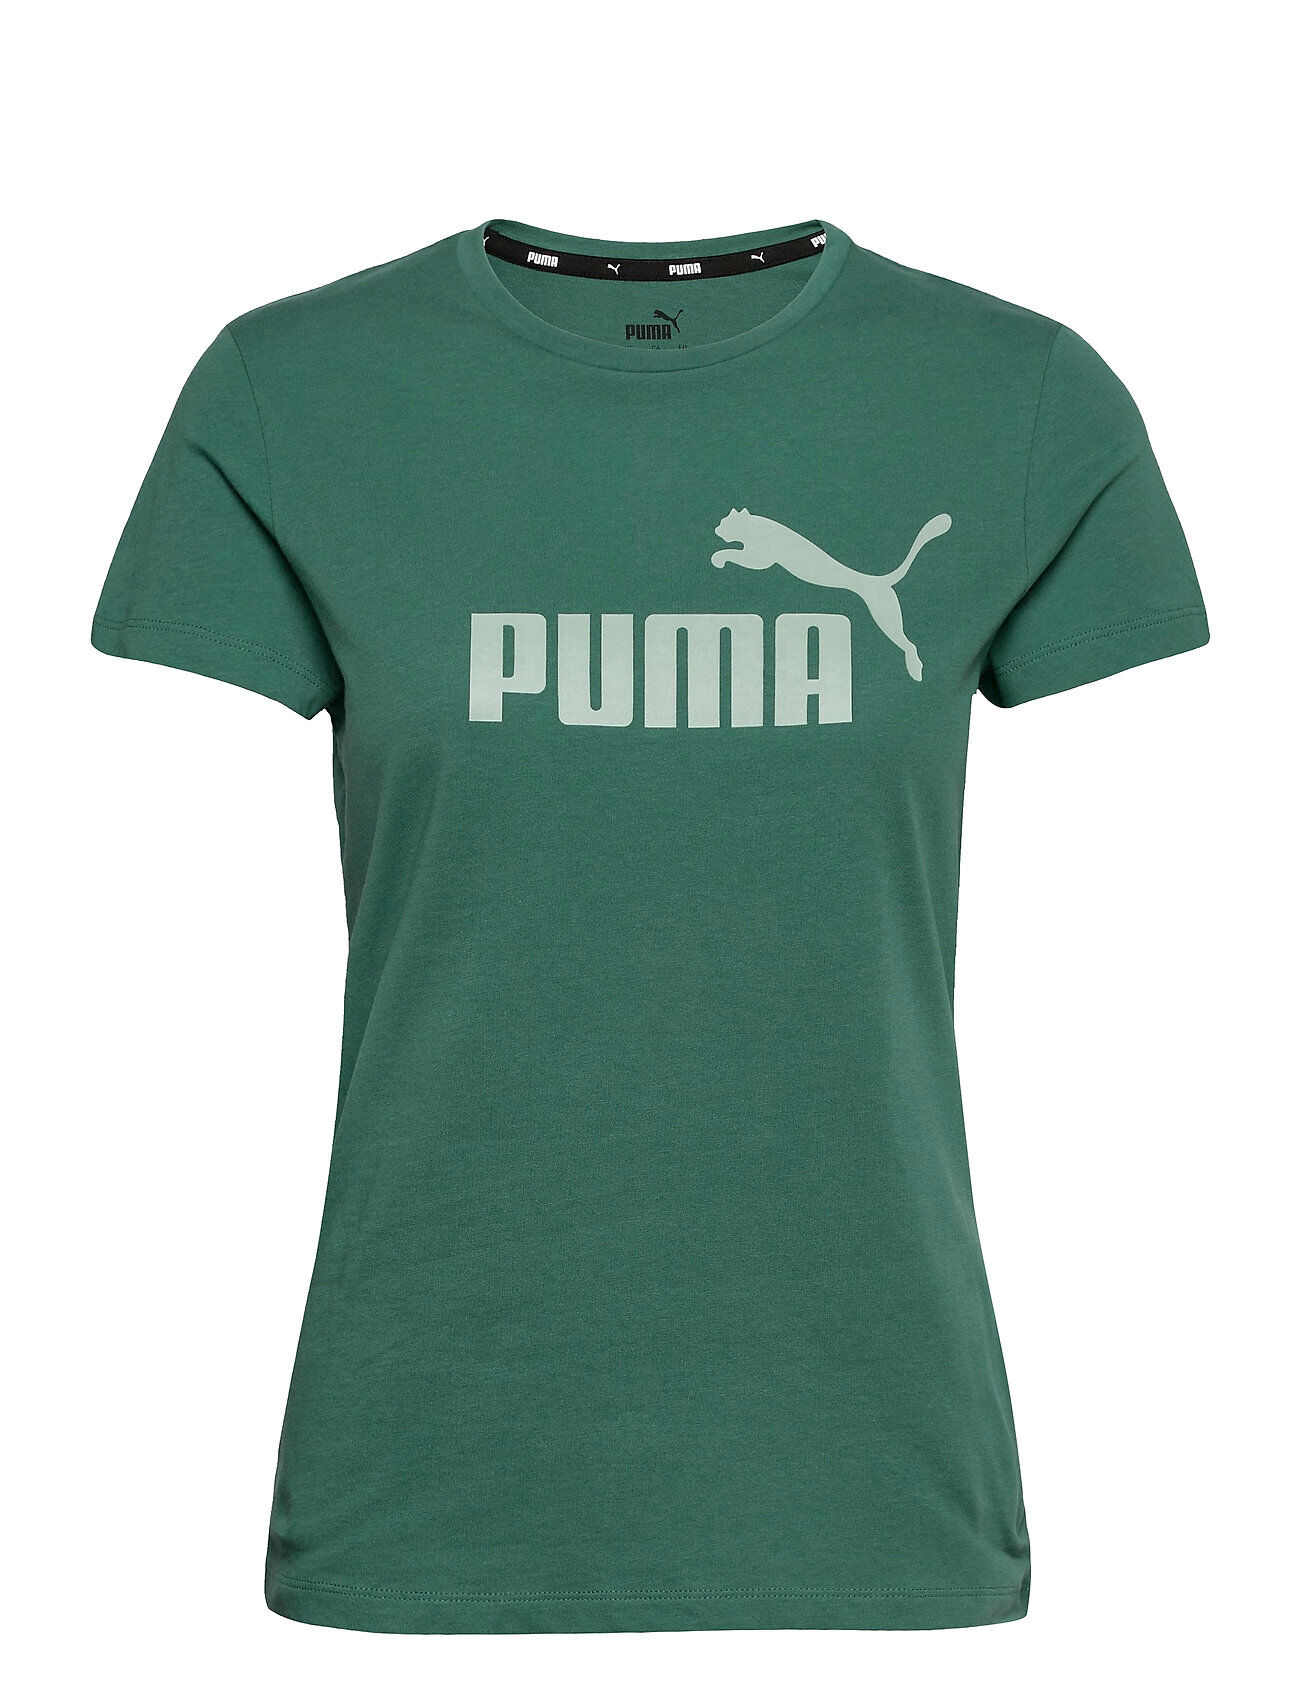 PUMA Ess Logo Tee T-shirts & Tops Short-sleeved Grønn PUMA